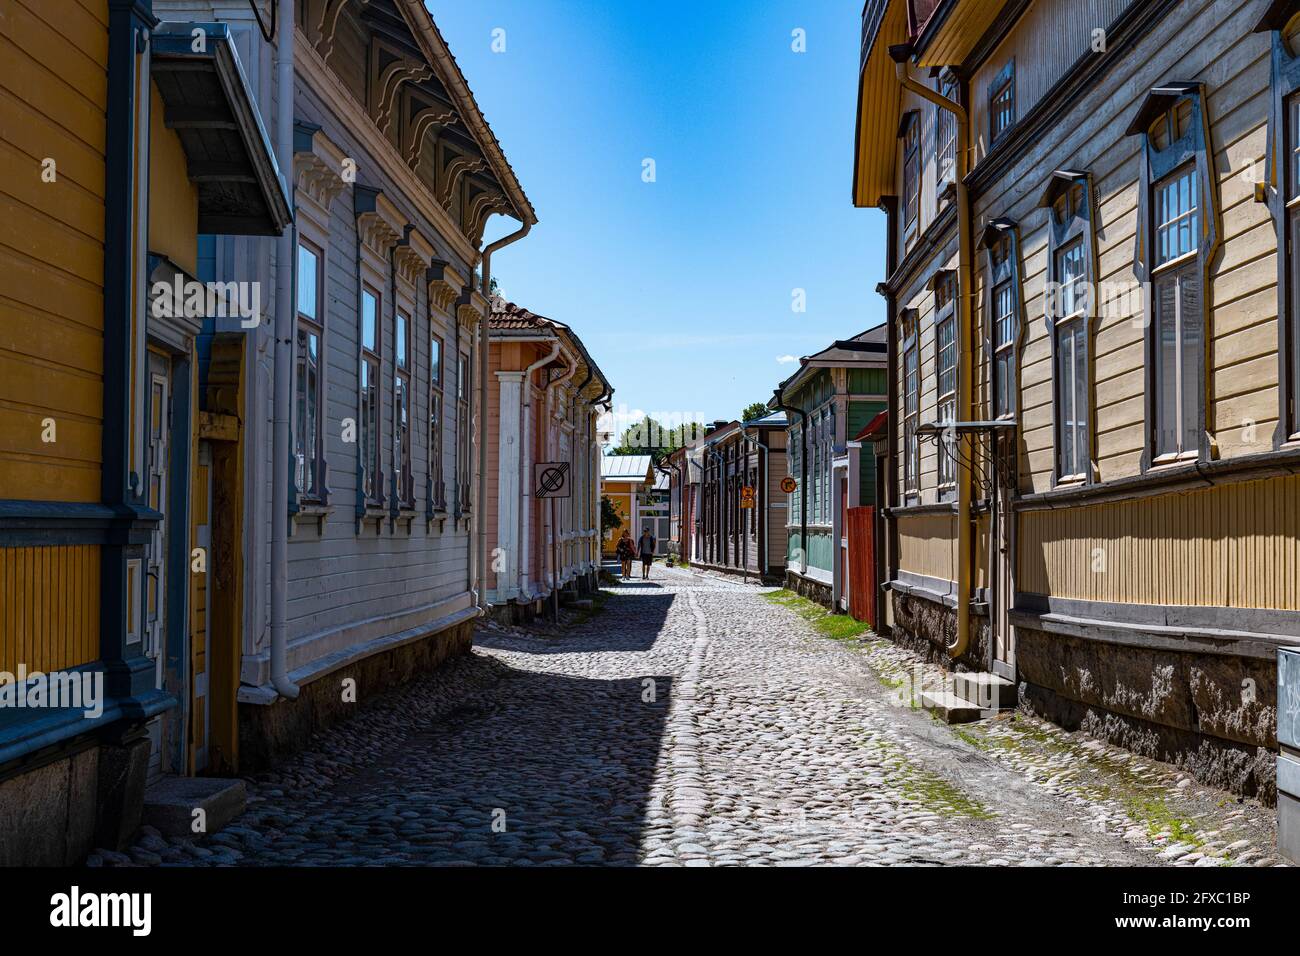 Finland, Rauma, Old wooden houses along cobblestone street in Old Rauma Stock Photo